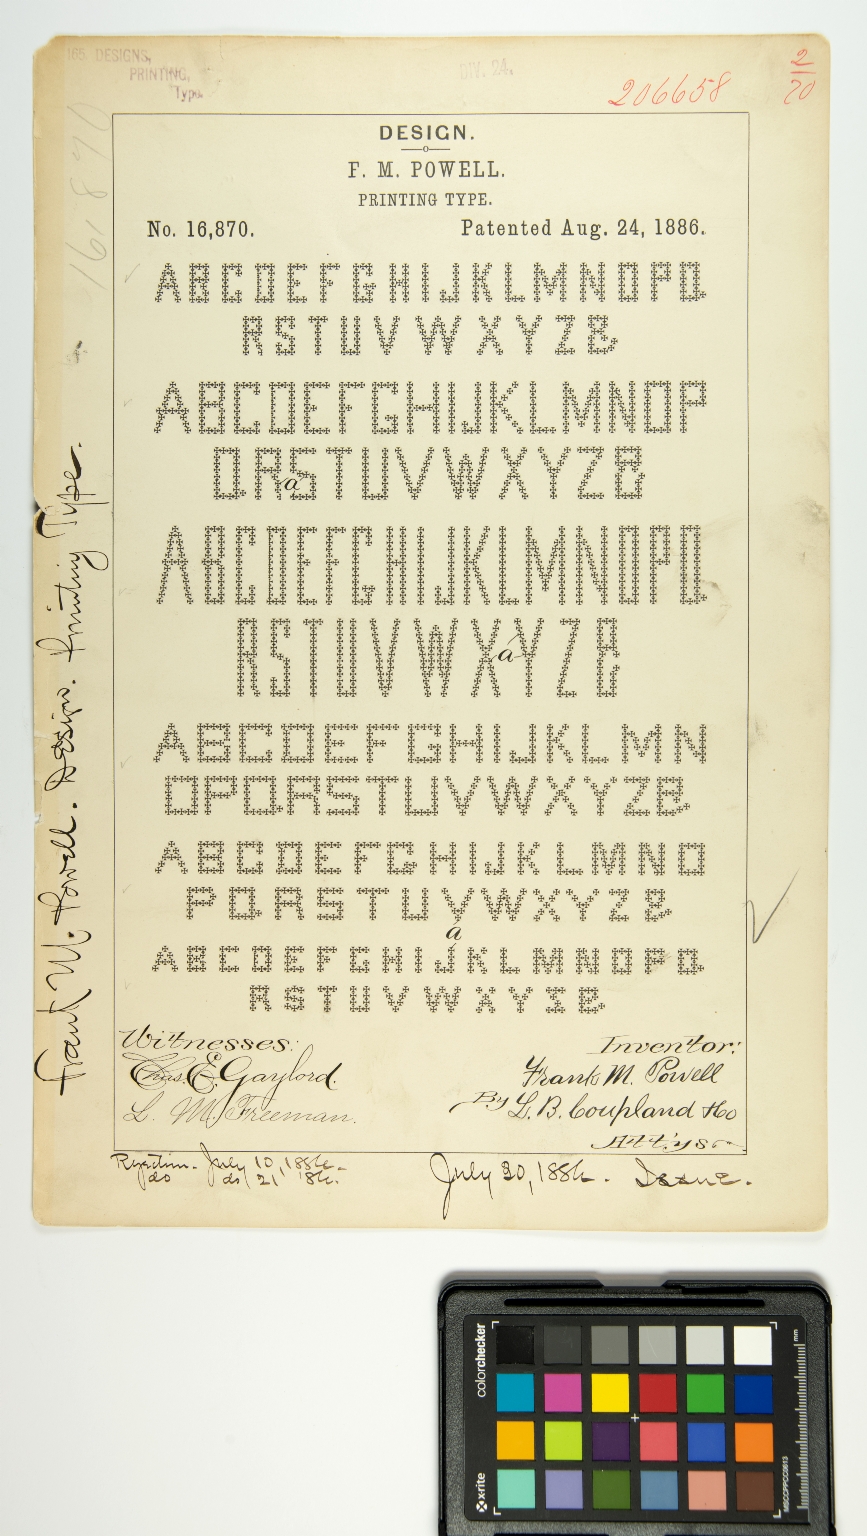 F.M. Powell, Printing Type